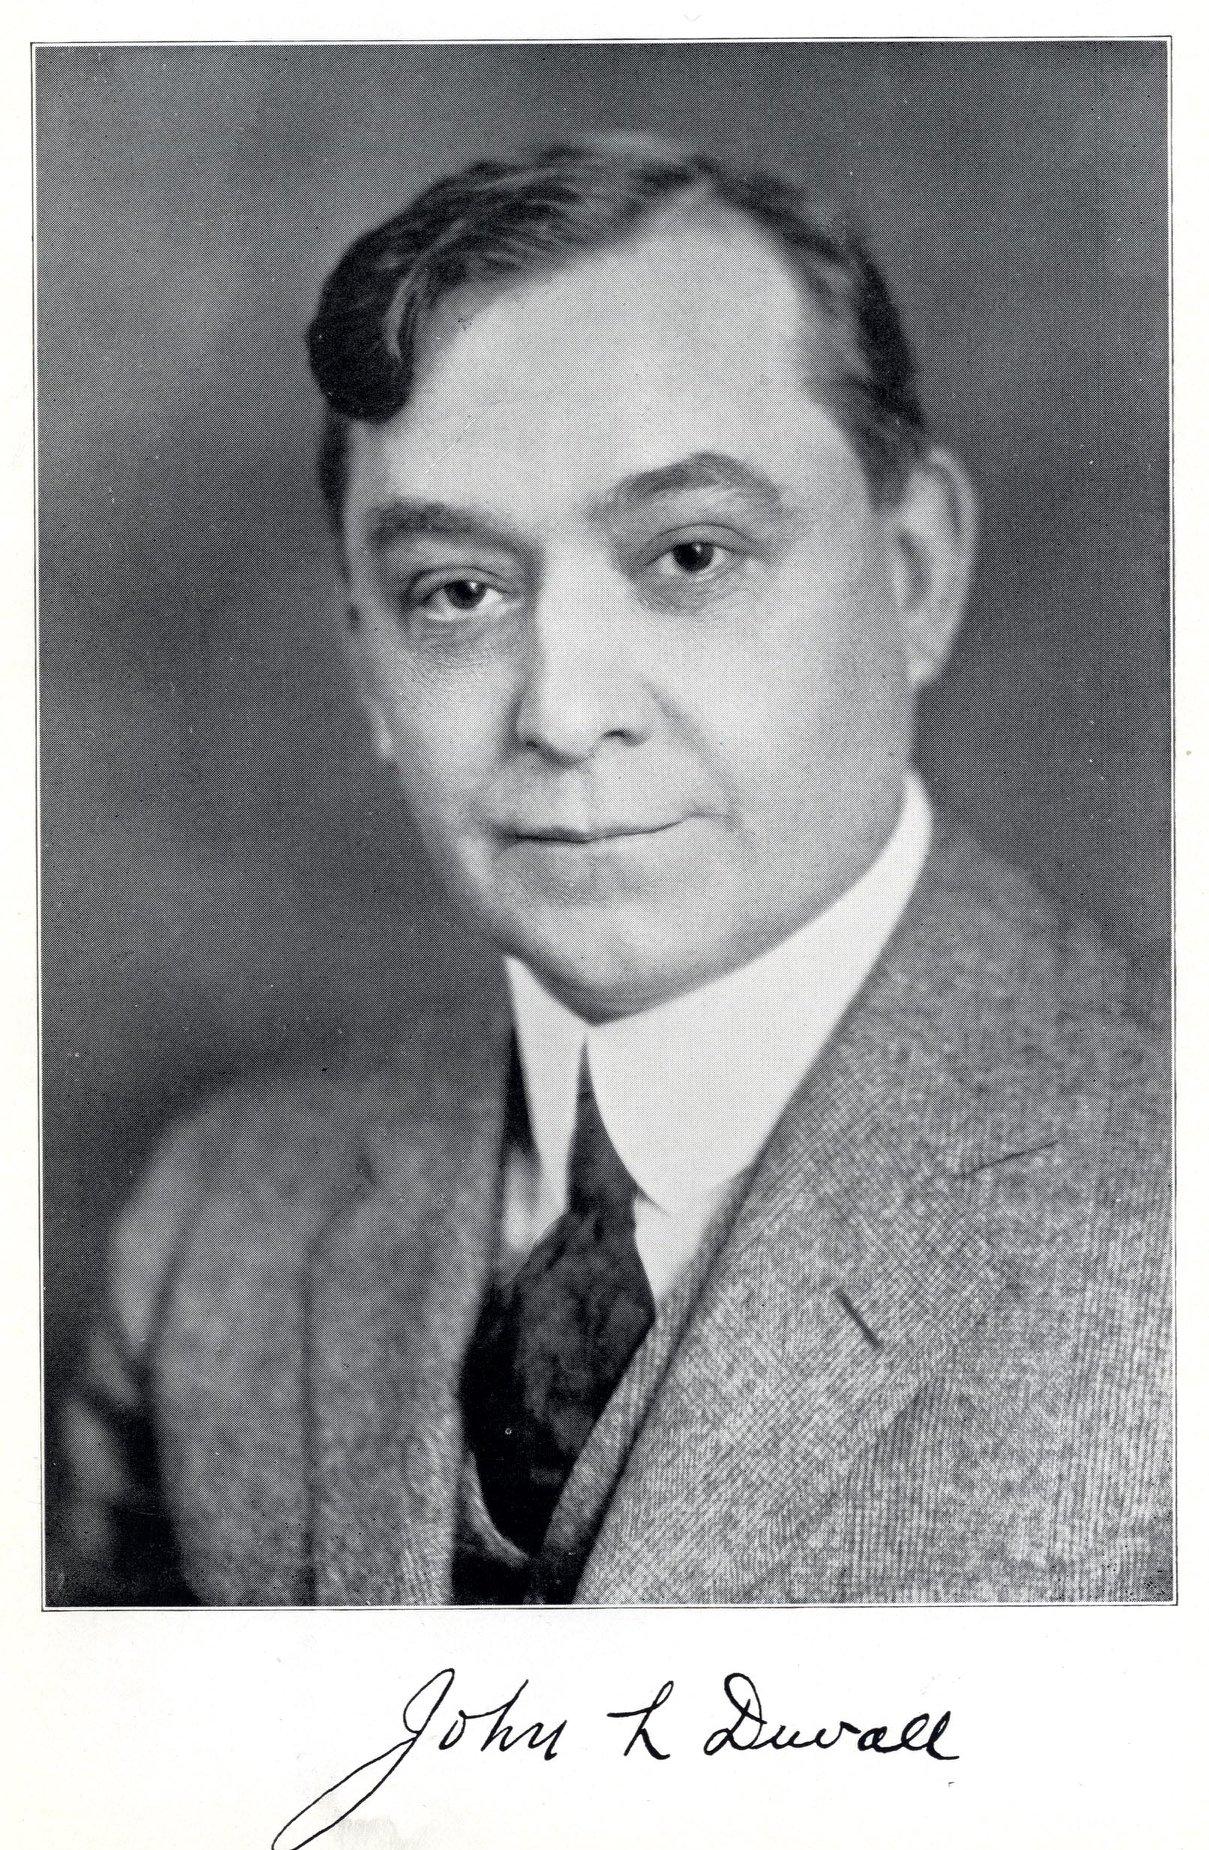 John L. Duvall